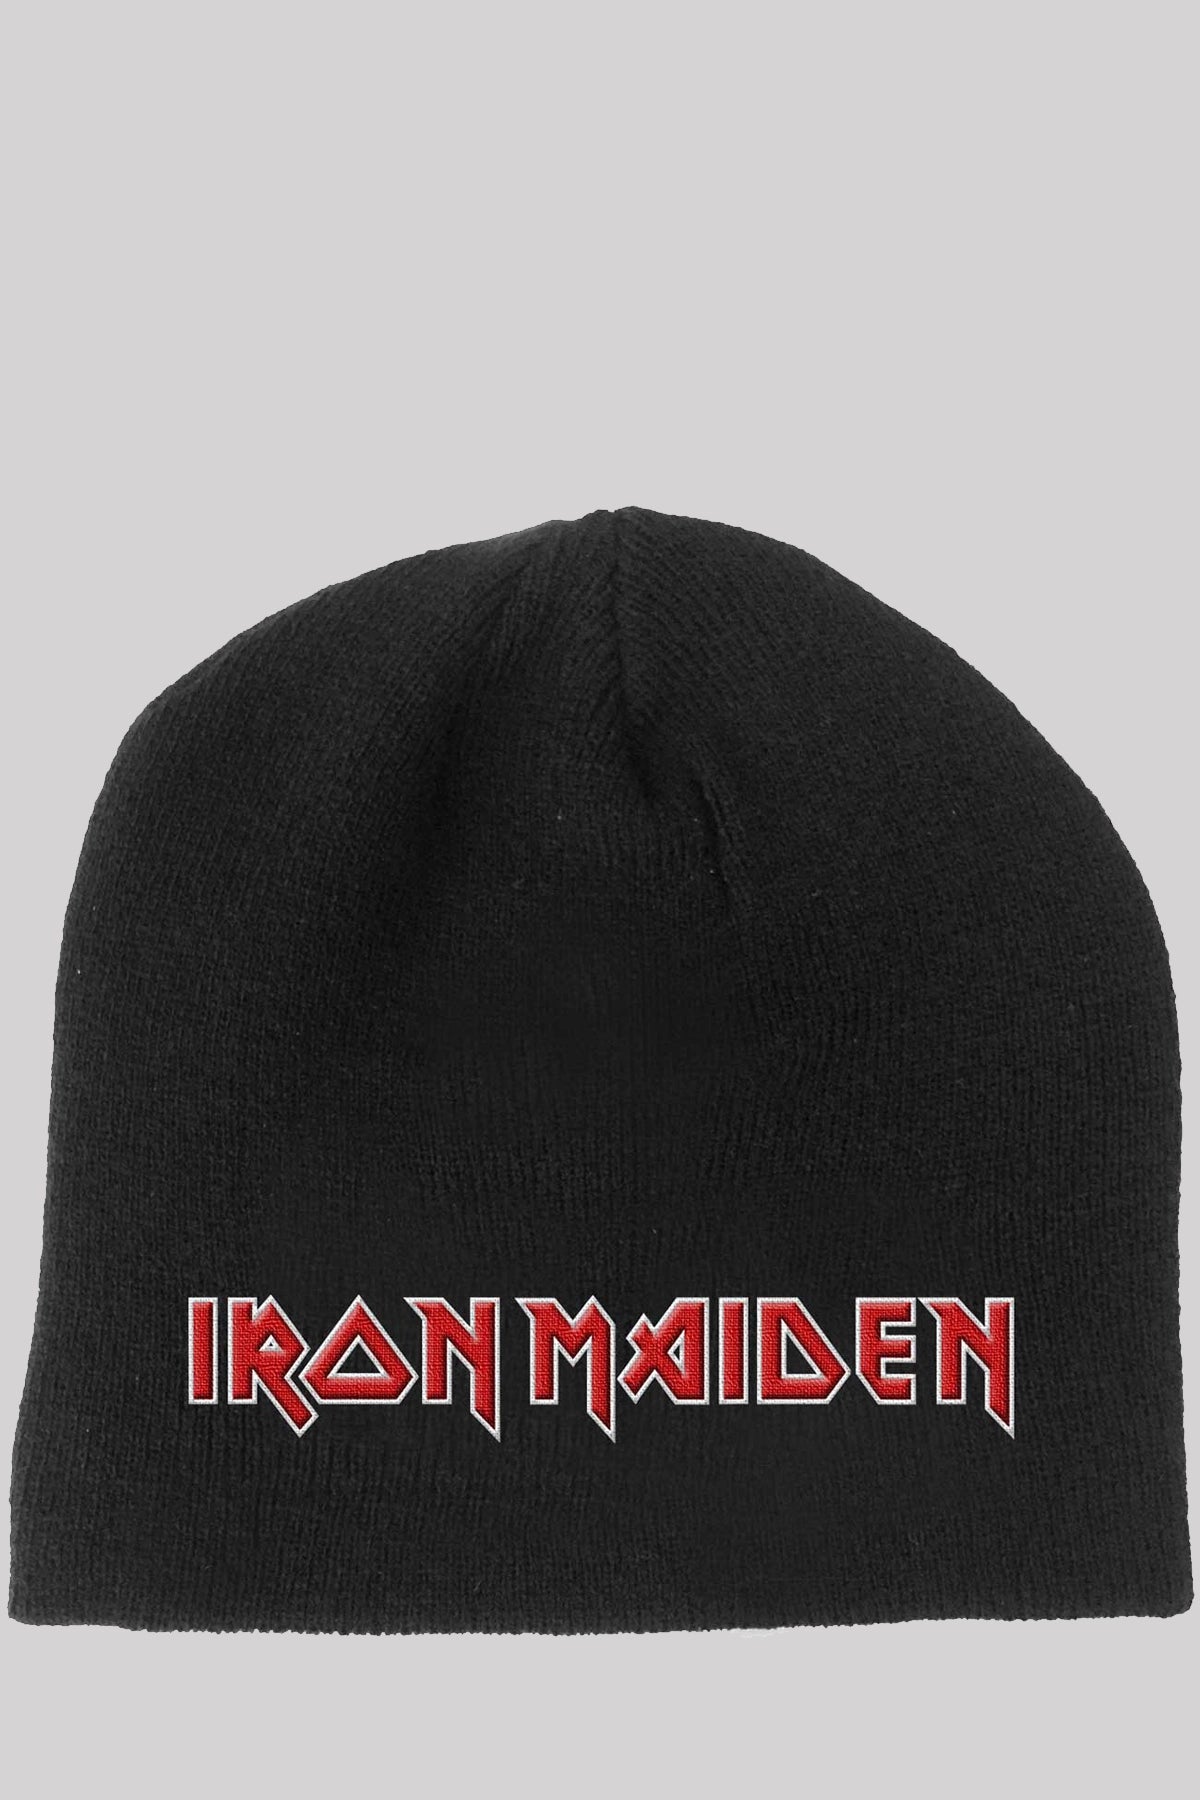 Iron Maiden Unisex Beanie Hat: Logo Official Band Merch